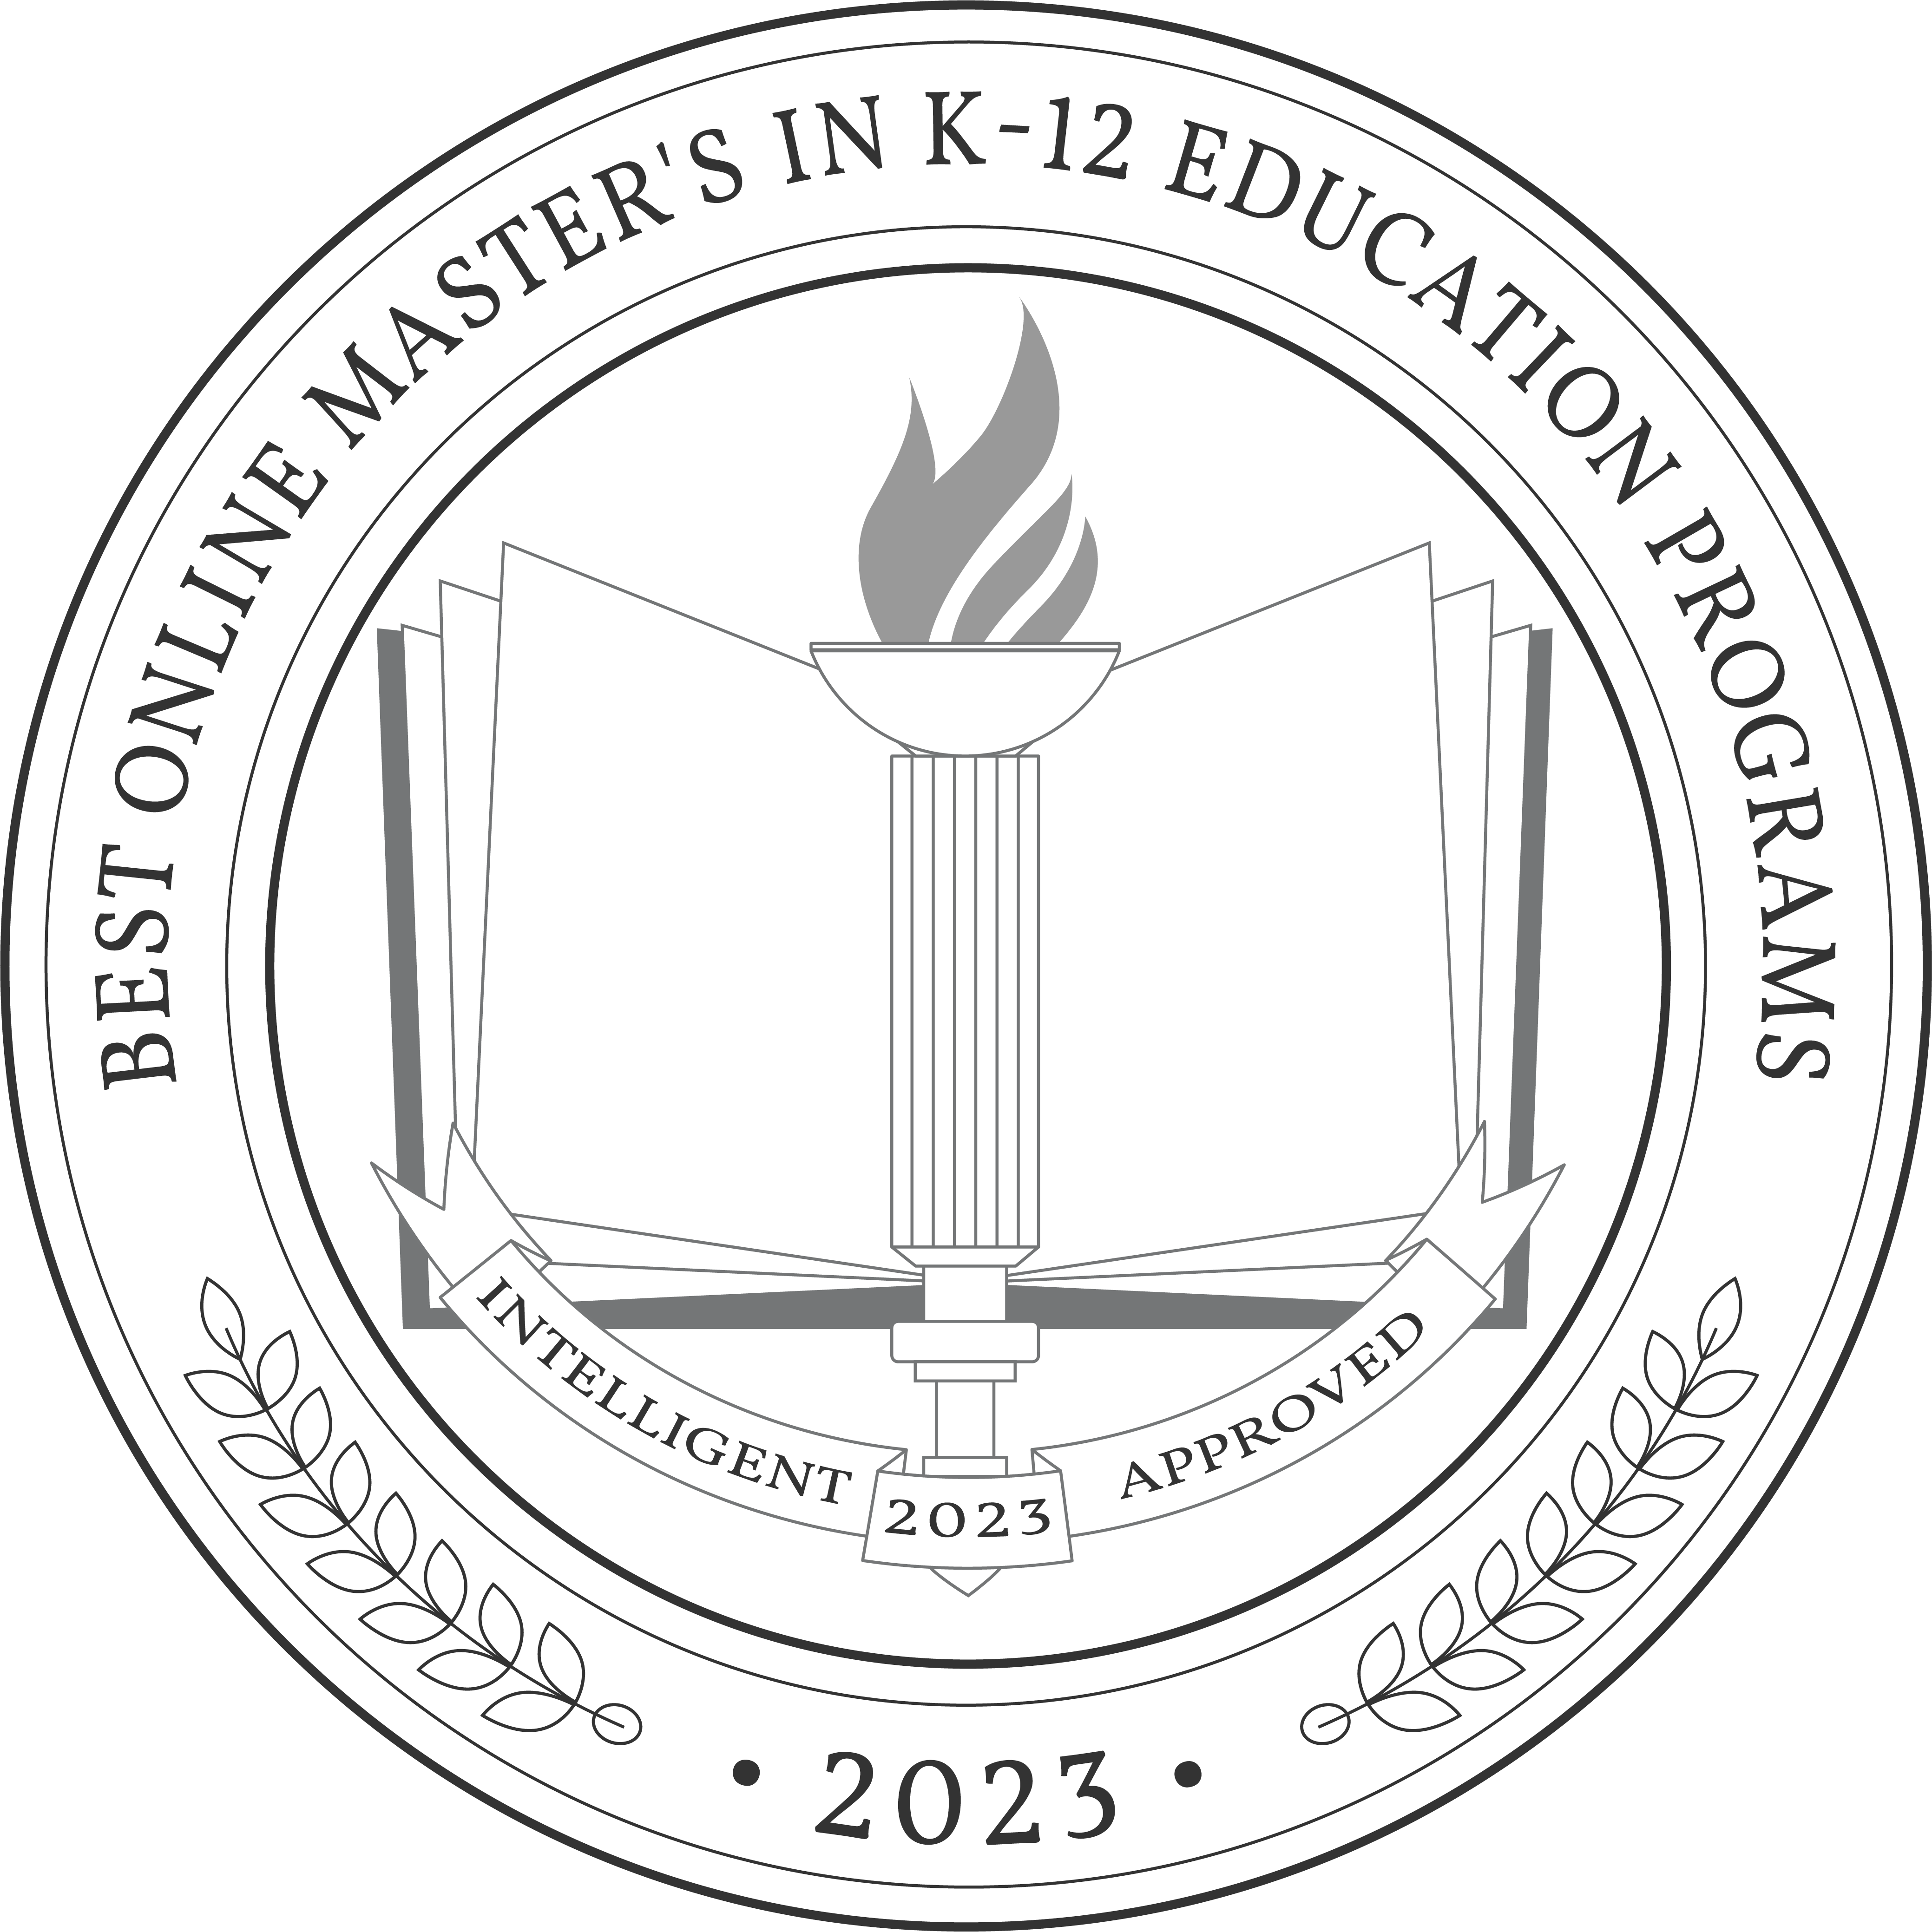 Best Online Master's in K-12 Education Programs badge